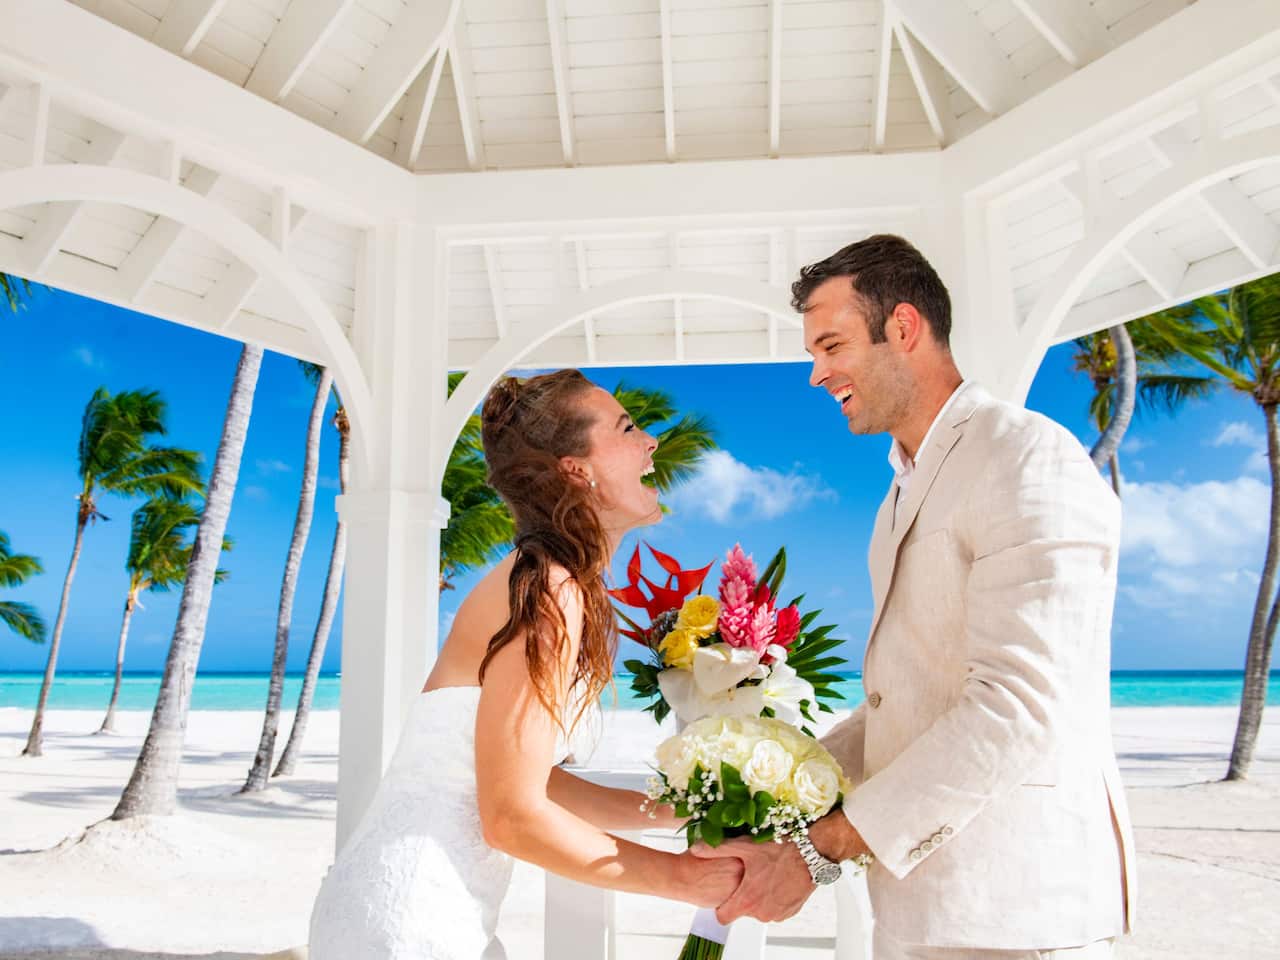 Wedding ceremony setup on resort beachfront